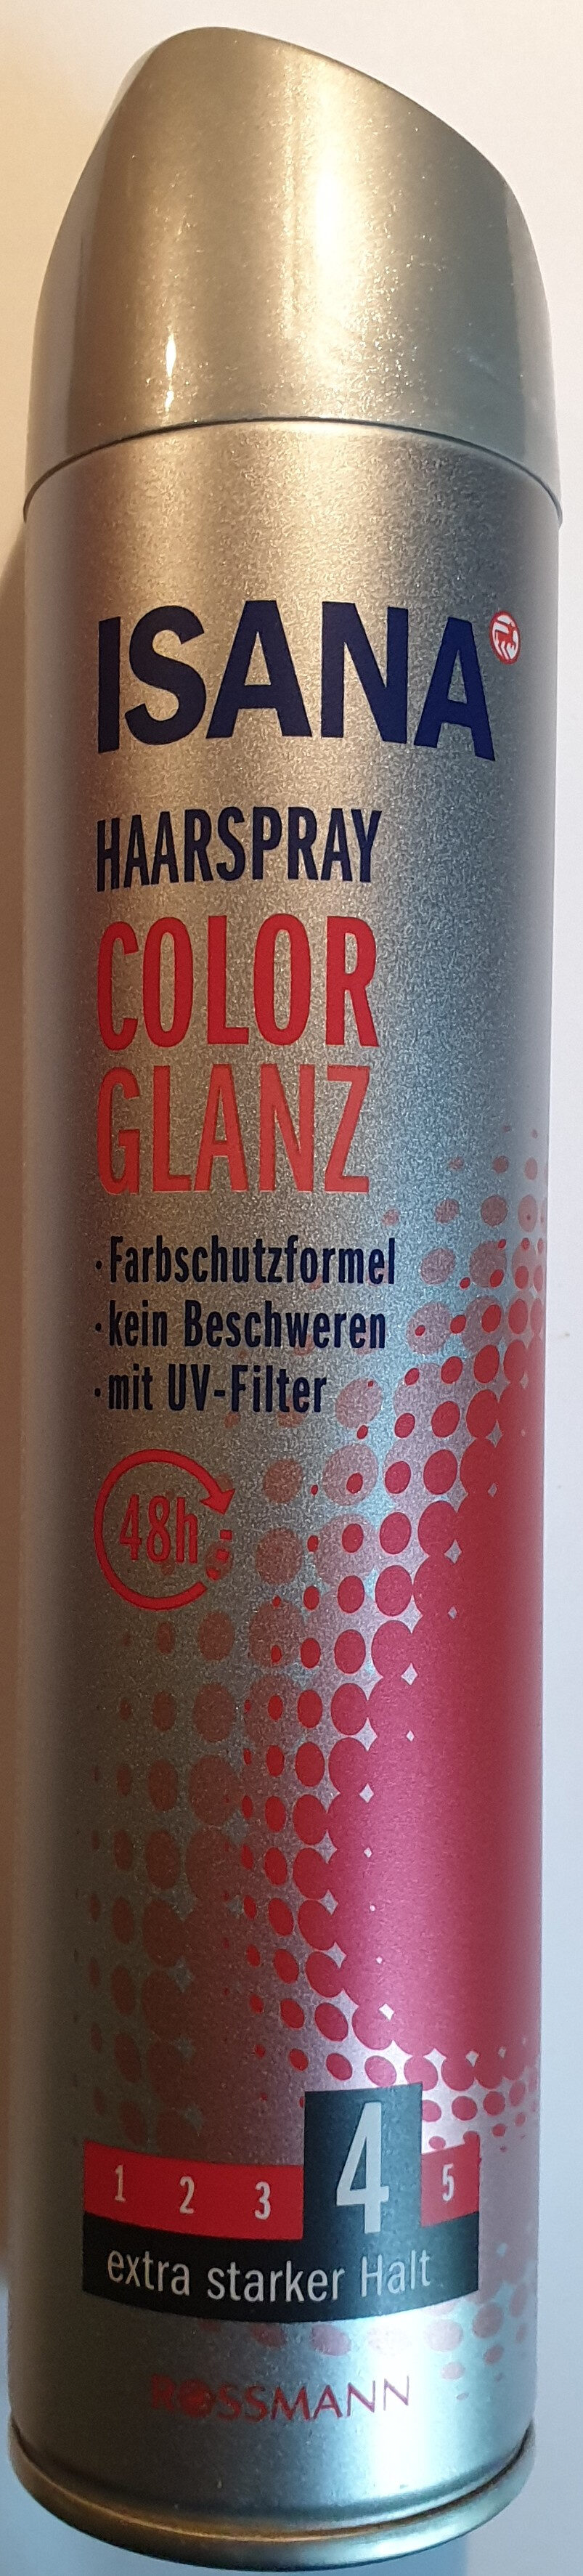 Haarspray Color Glanz, 4 extra starker Halt - Product - de